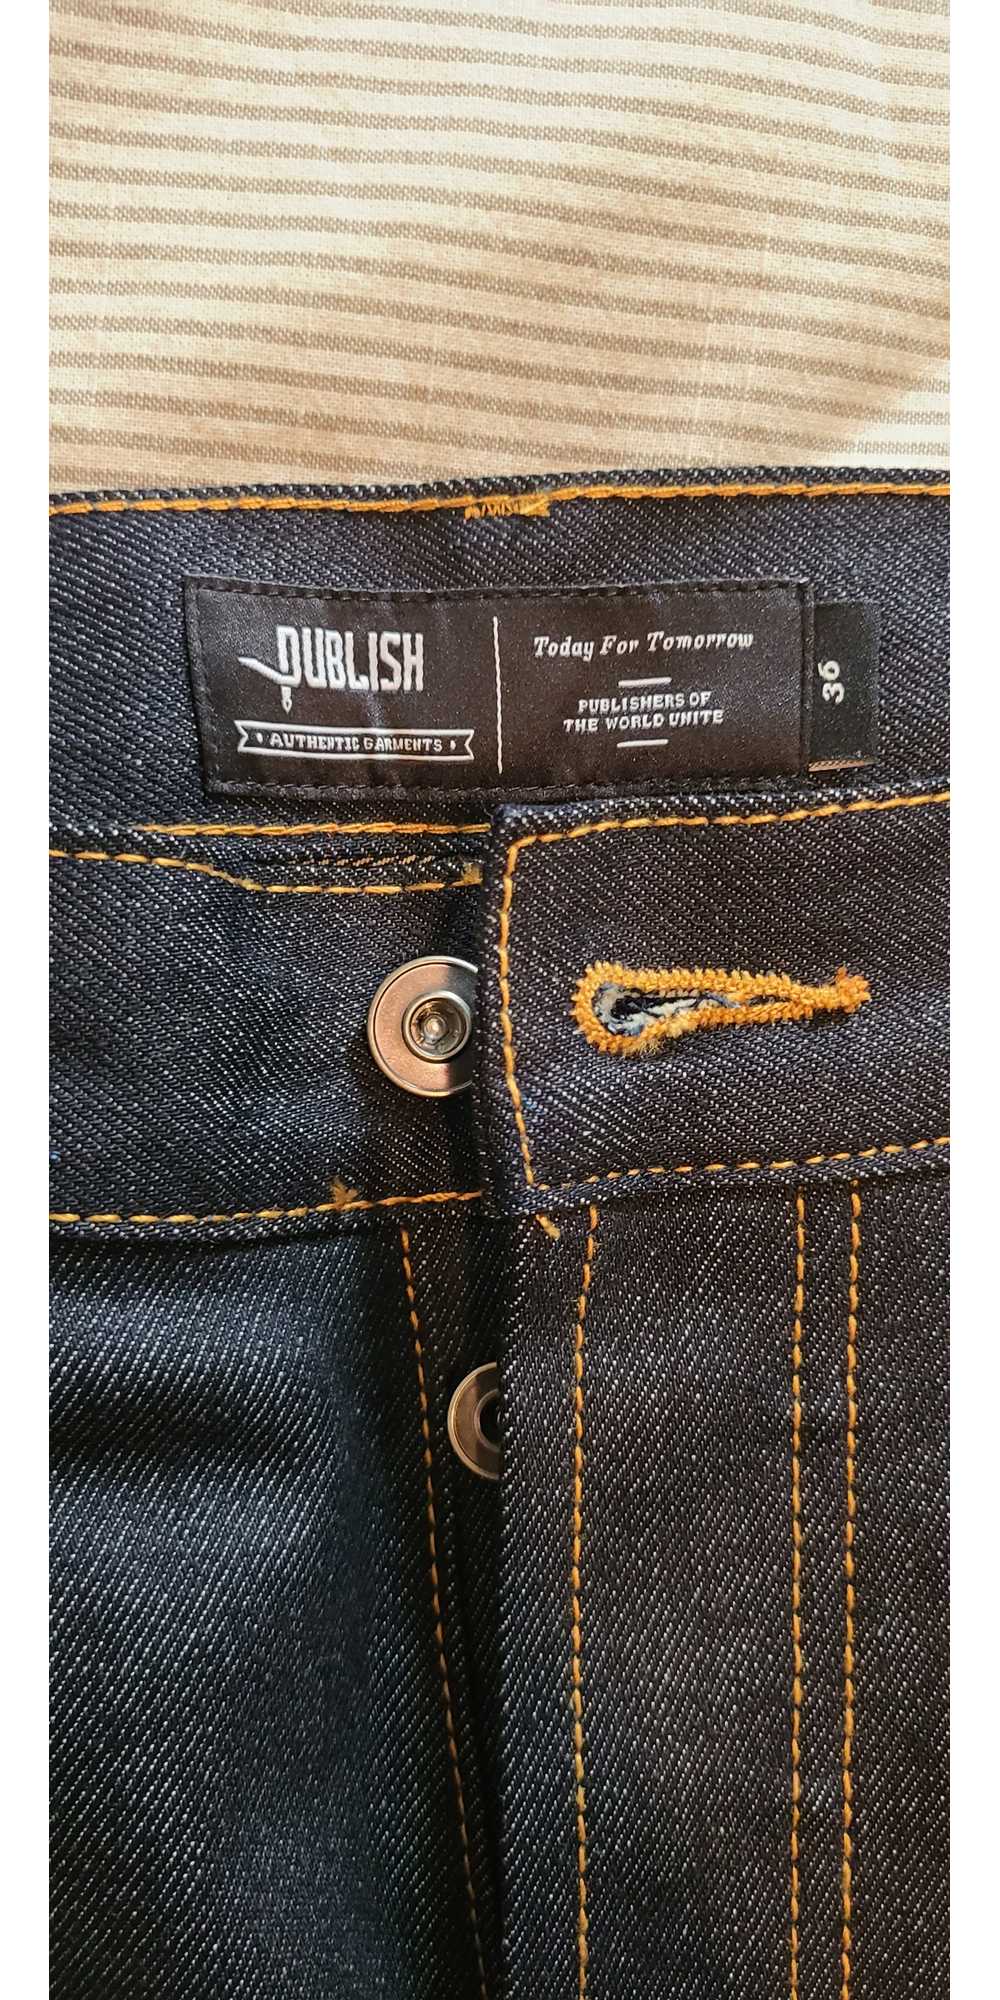 Publish Publish Brand Dark Denim Jeans - image 5